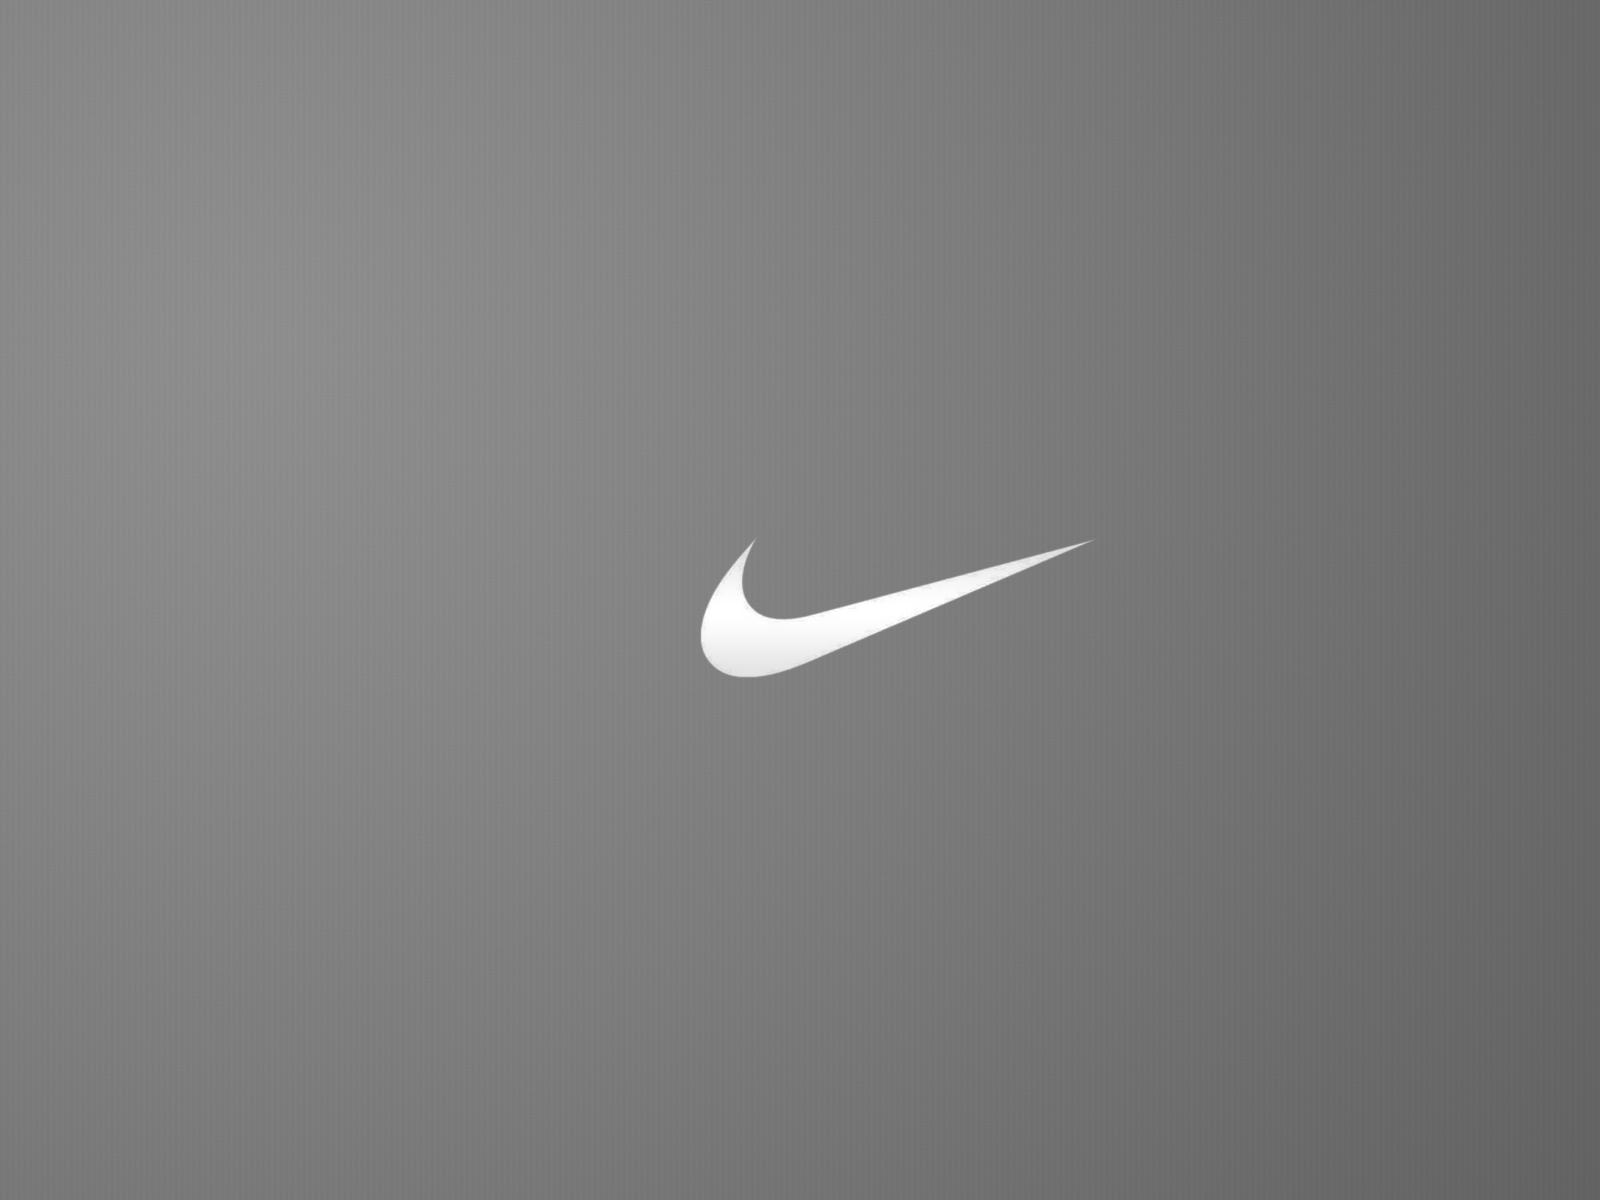 Silver Nike Logo - Nike Silver Logo Wallpaper High Resolution 274 #8992 Wallpaper ...